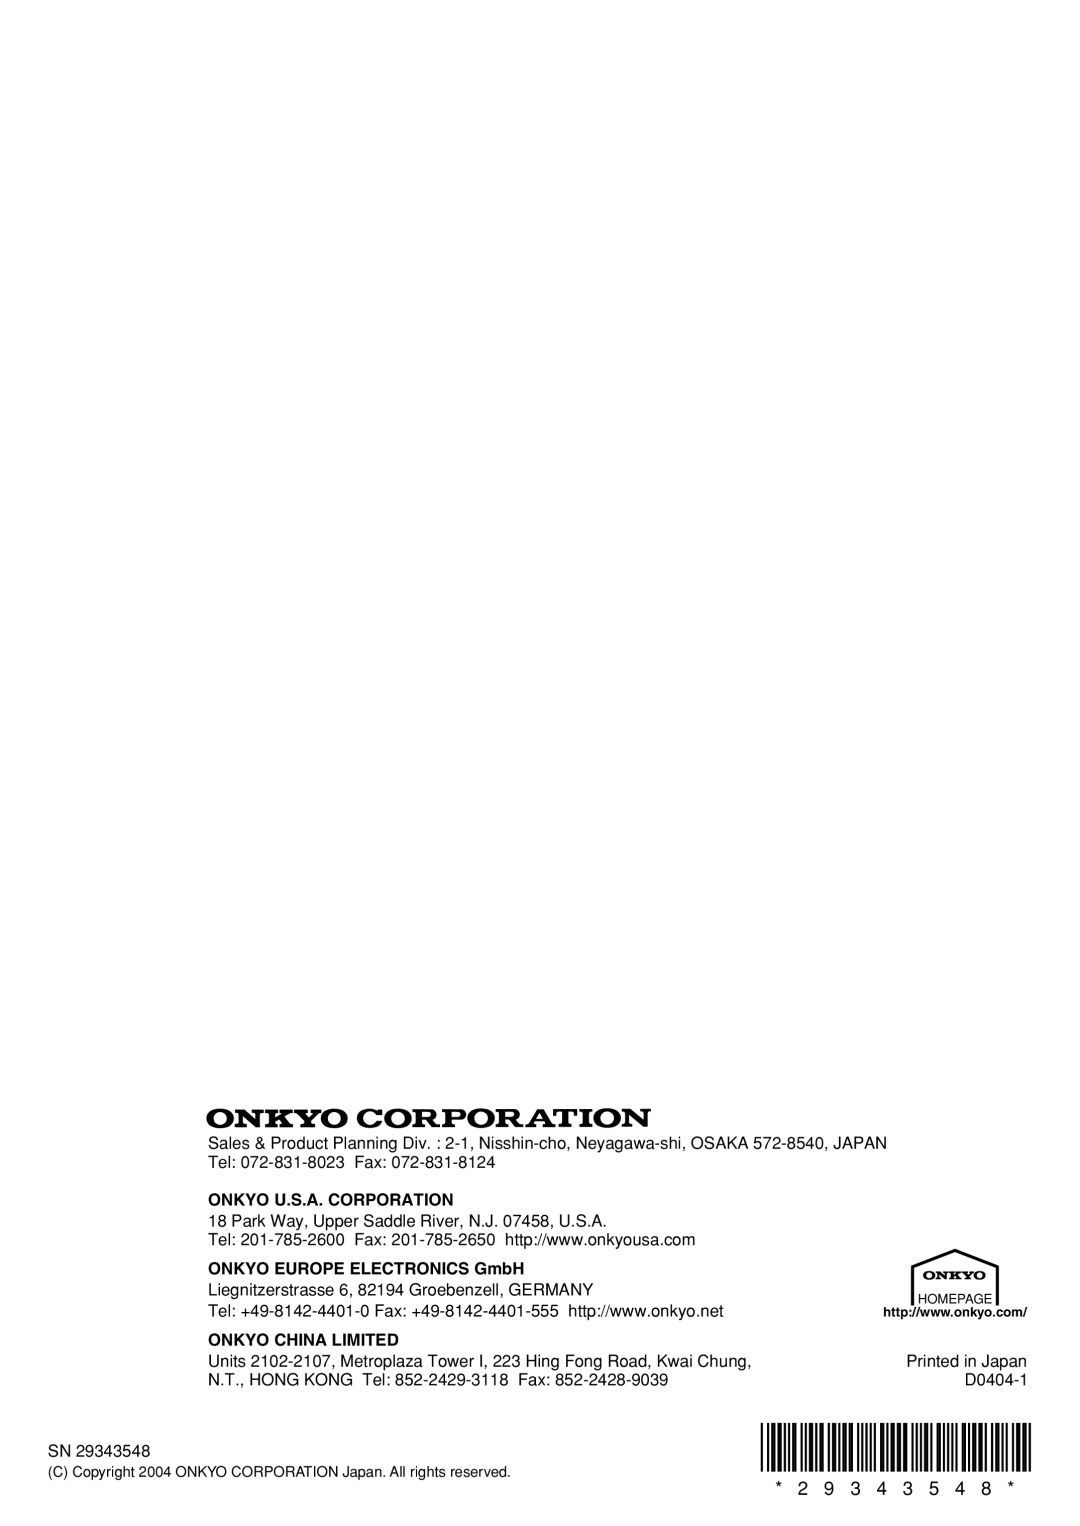 Onkyo C-1VL instruction manual Onkyo U.S.A. Corporation, ONKYO EUROPE ELECTRONICS GmbH, Onkyo China Limited 